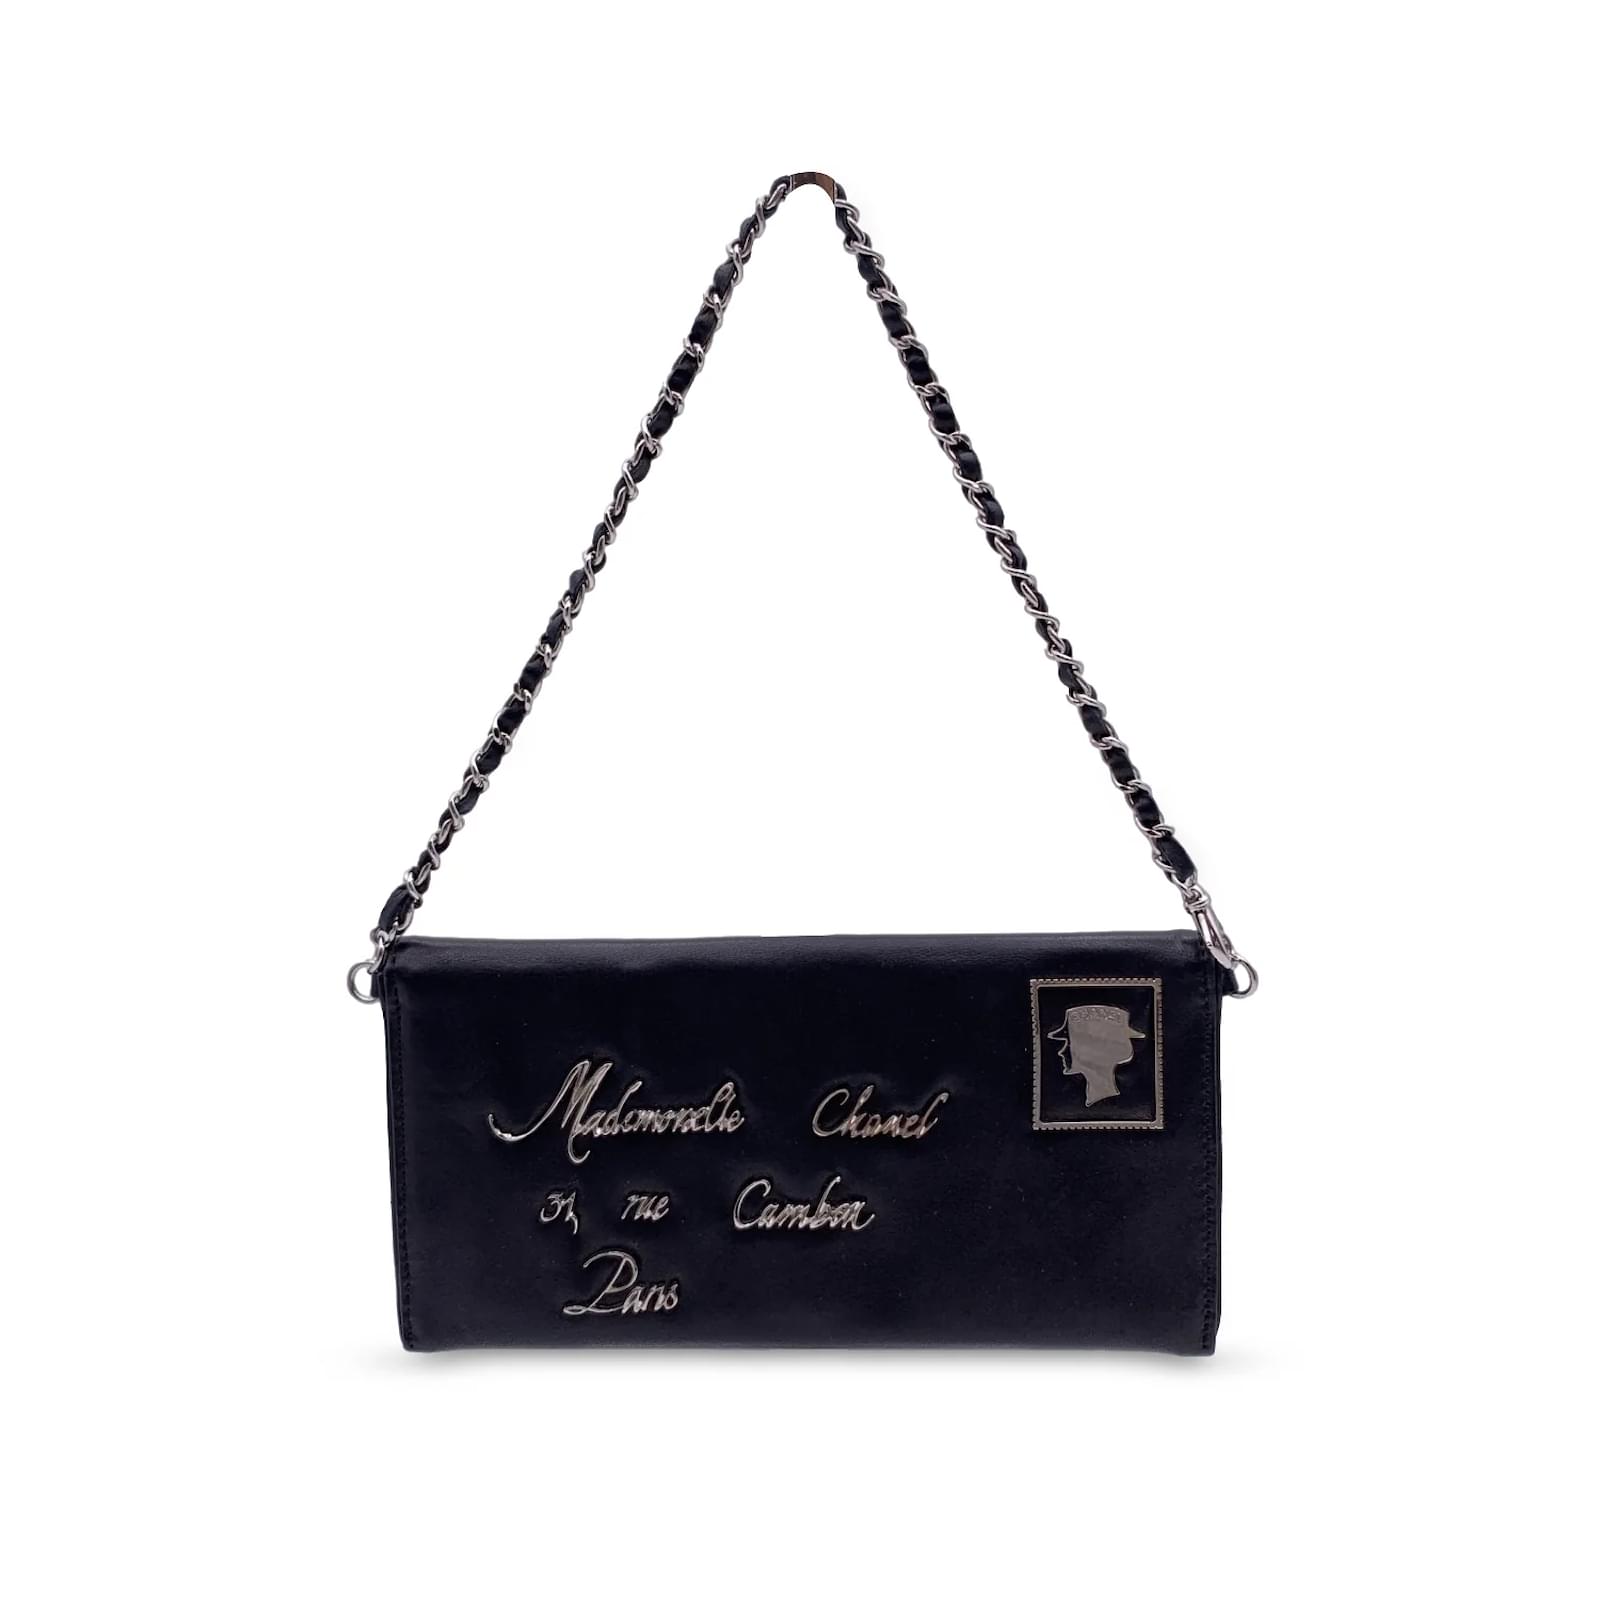 Chanel Black Leather Limited Edition Mademoiselle Postcard Mini